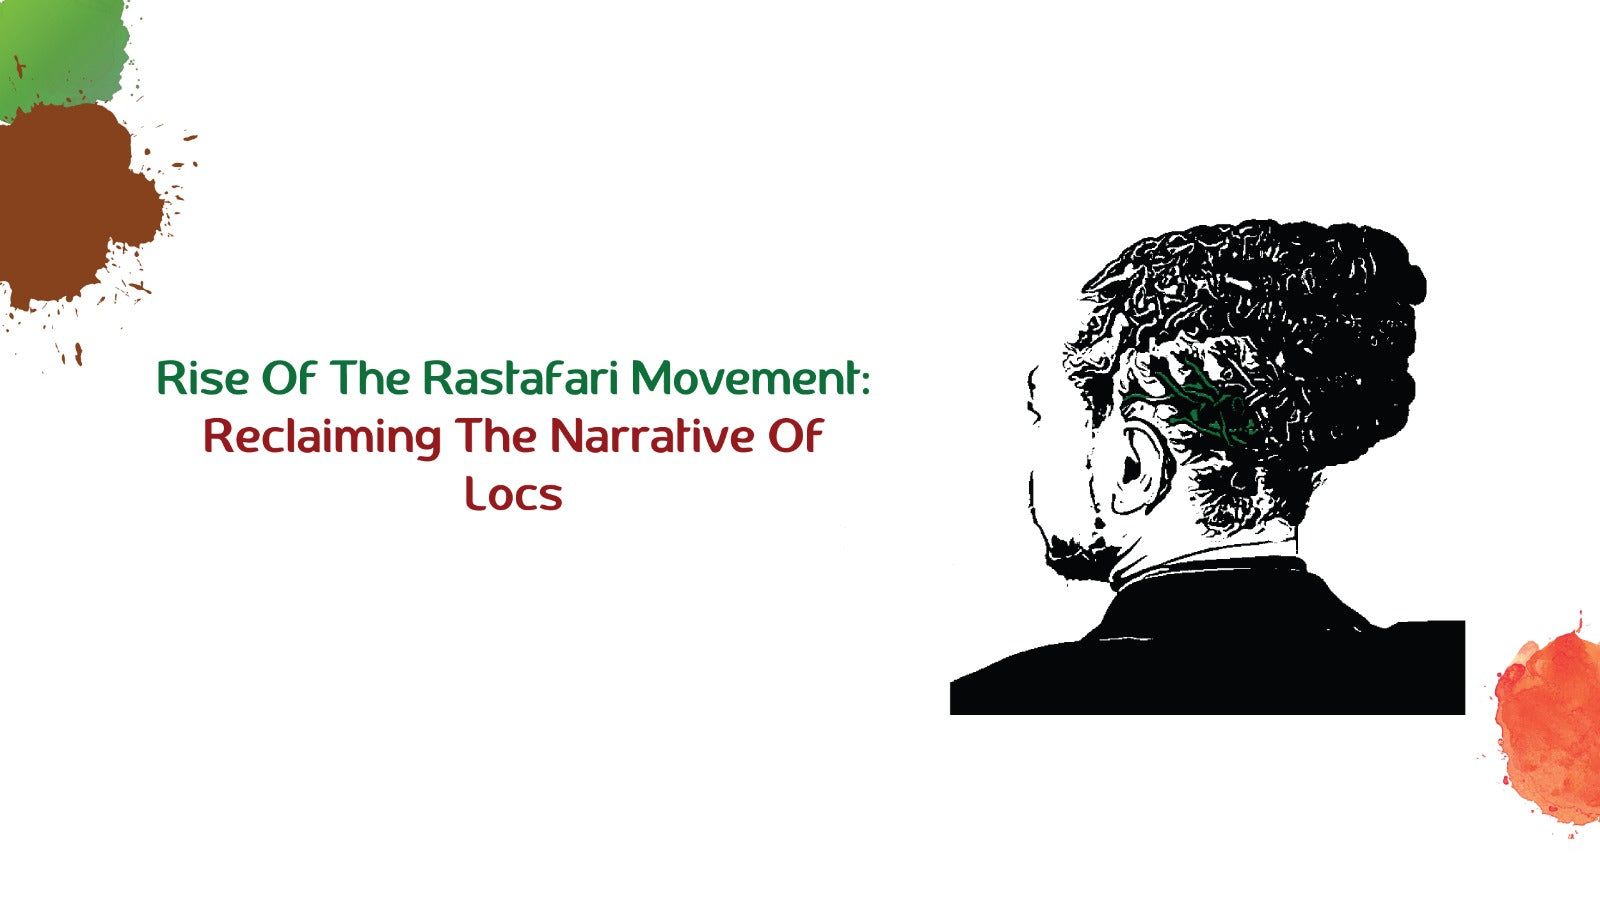 Rise Of The Rastafari Movement: Reclaiming The Narrative Of Locs